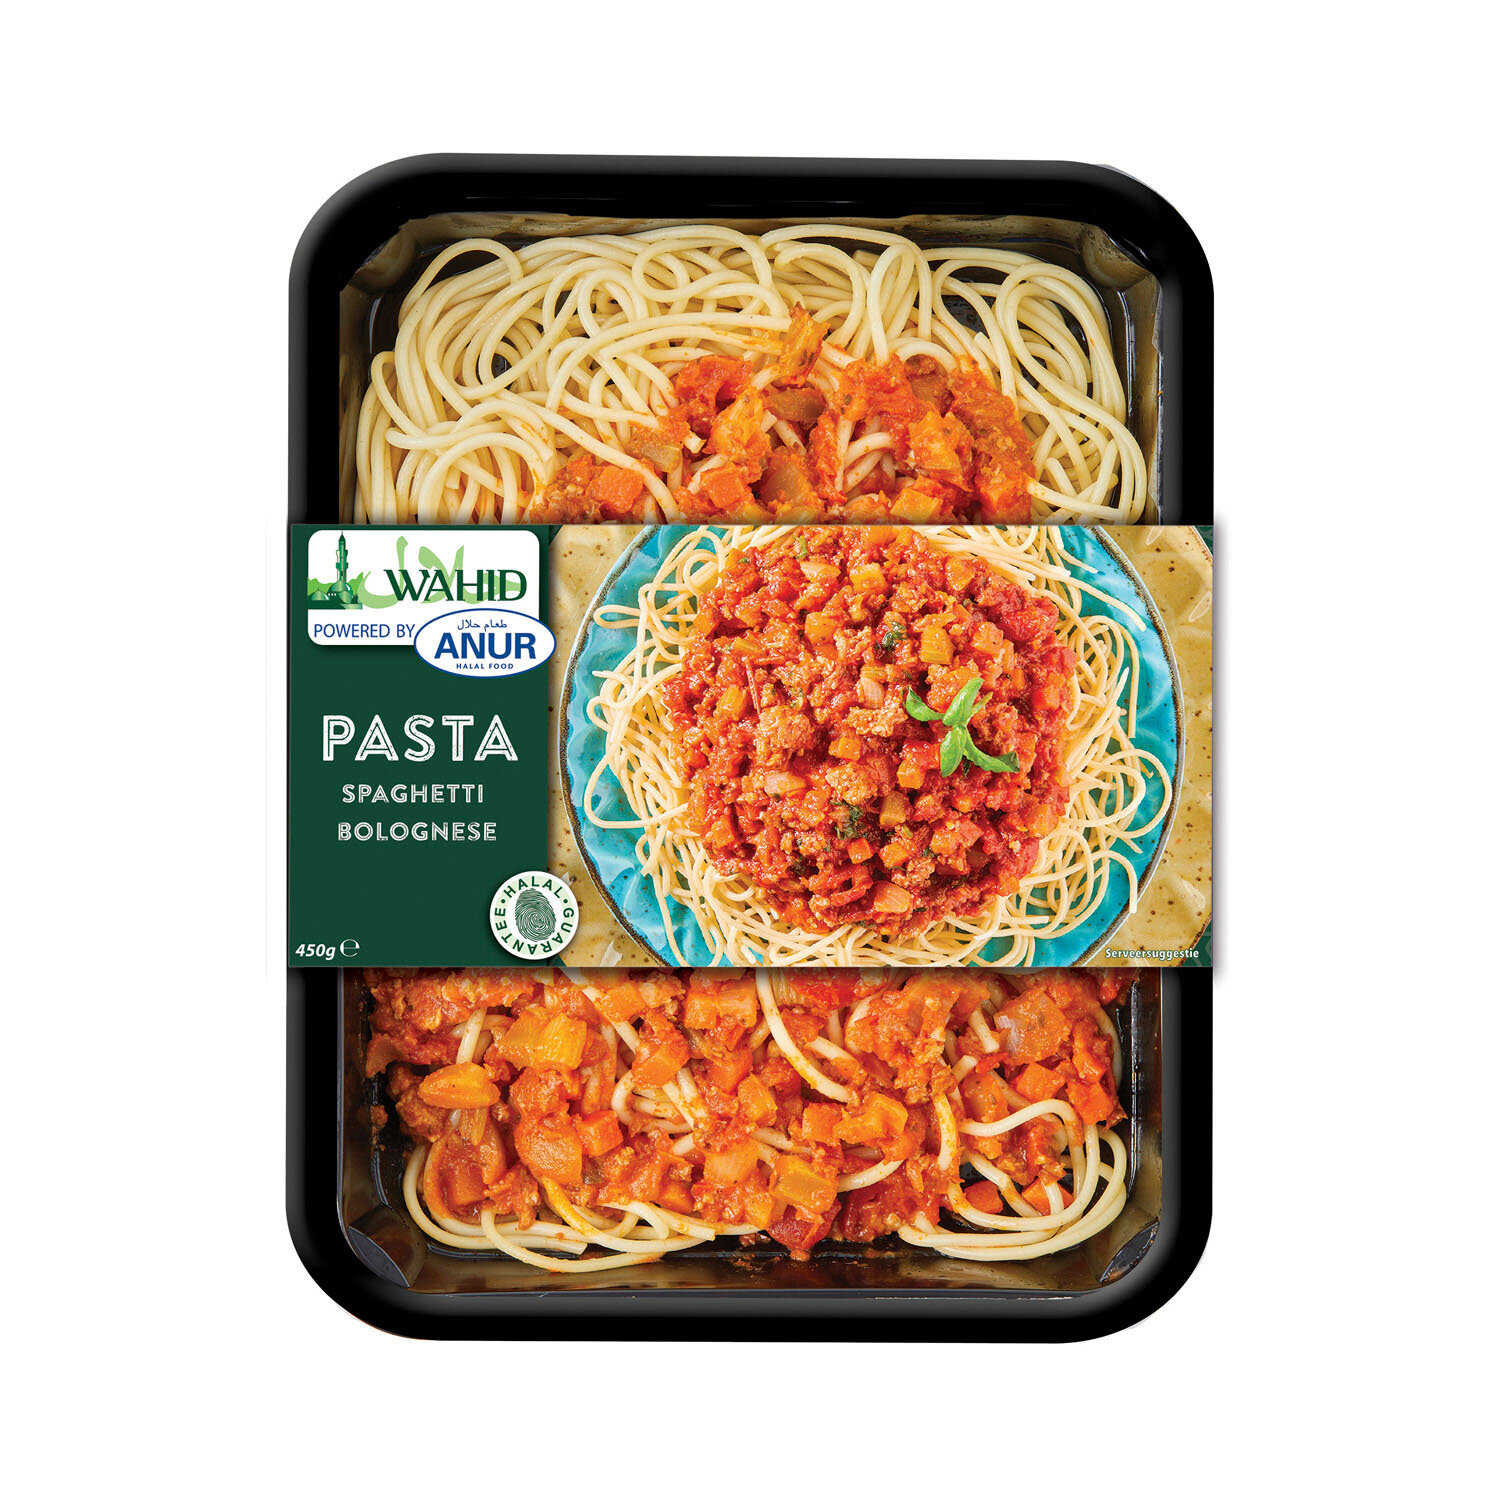 Pasta - Spaghetti bolognese - Wahid (Copy)